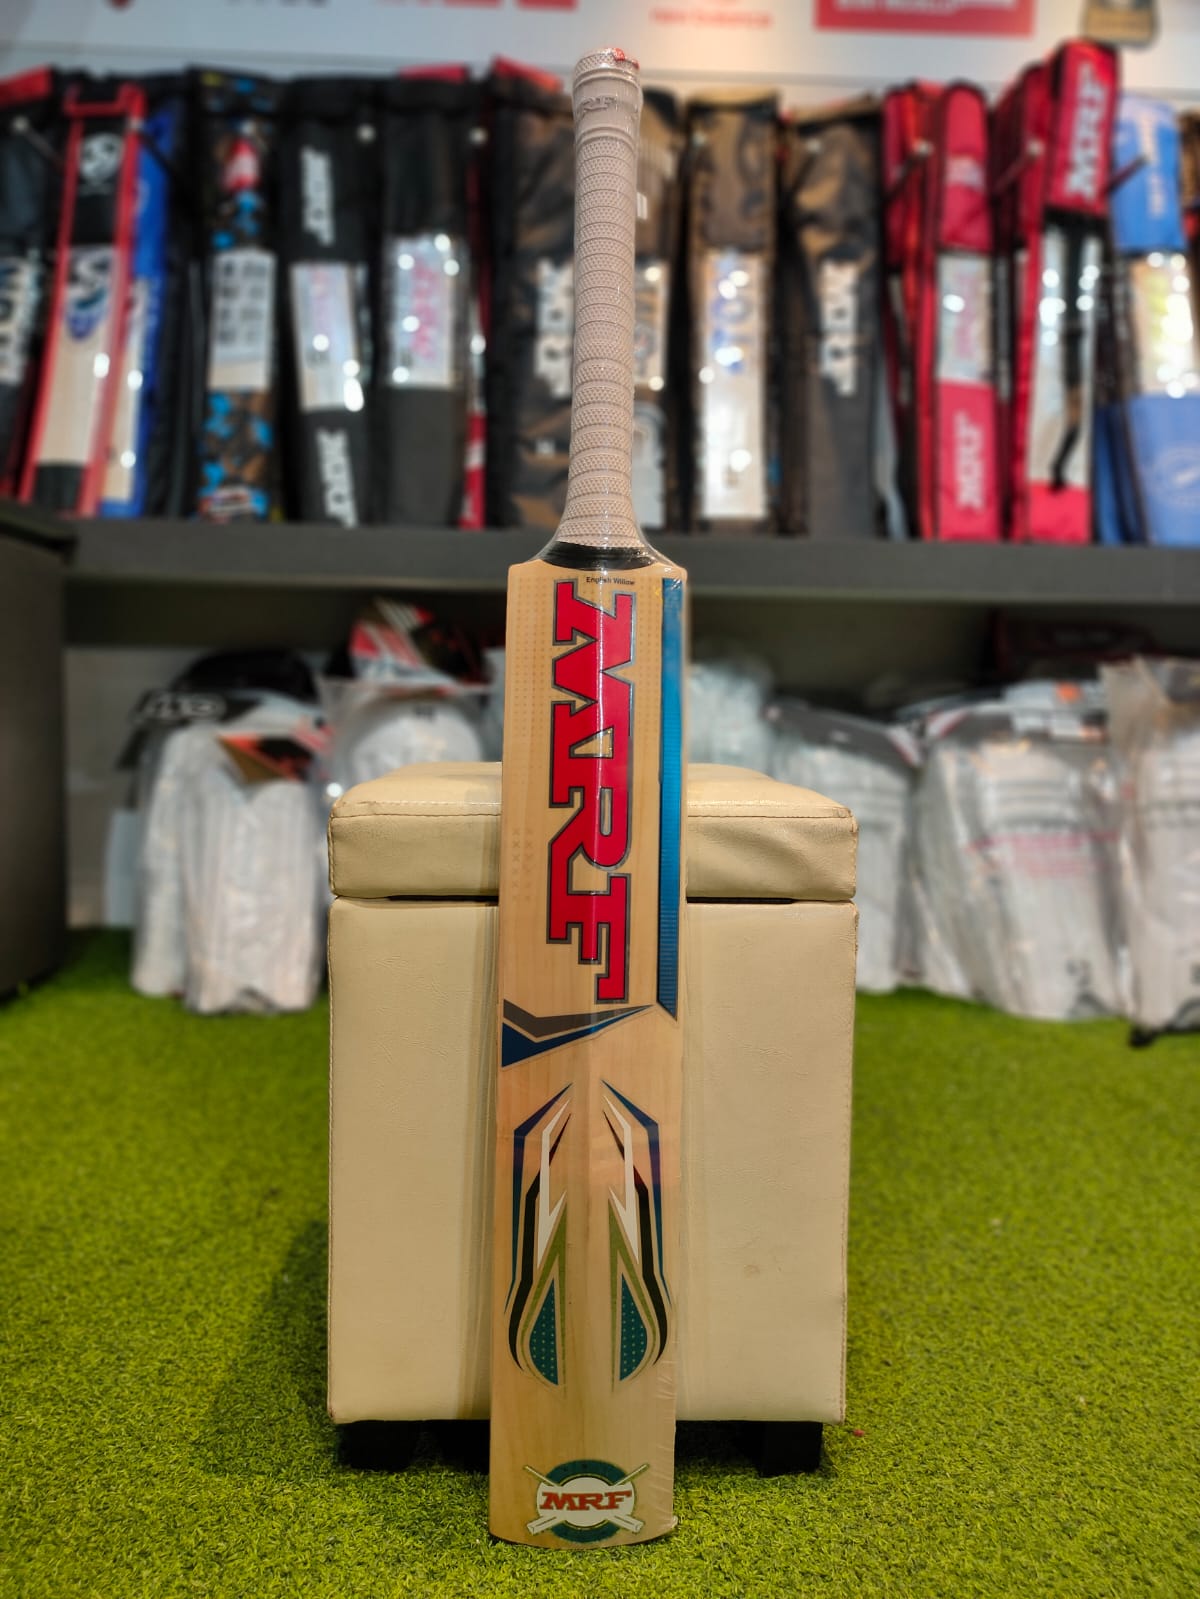 Cricket Bat - MRF-LEGEND VK 18